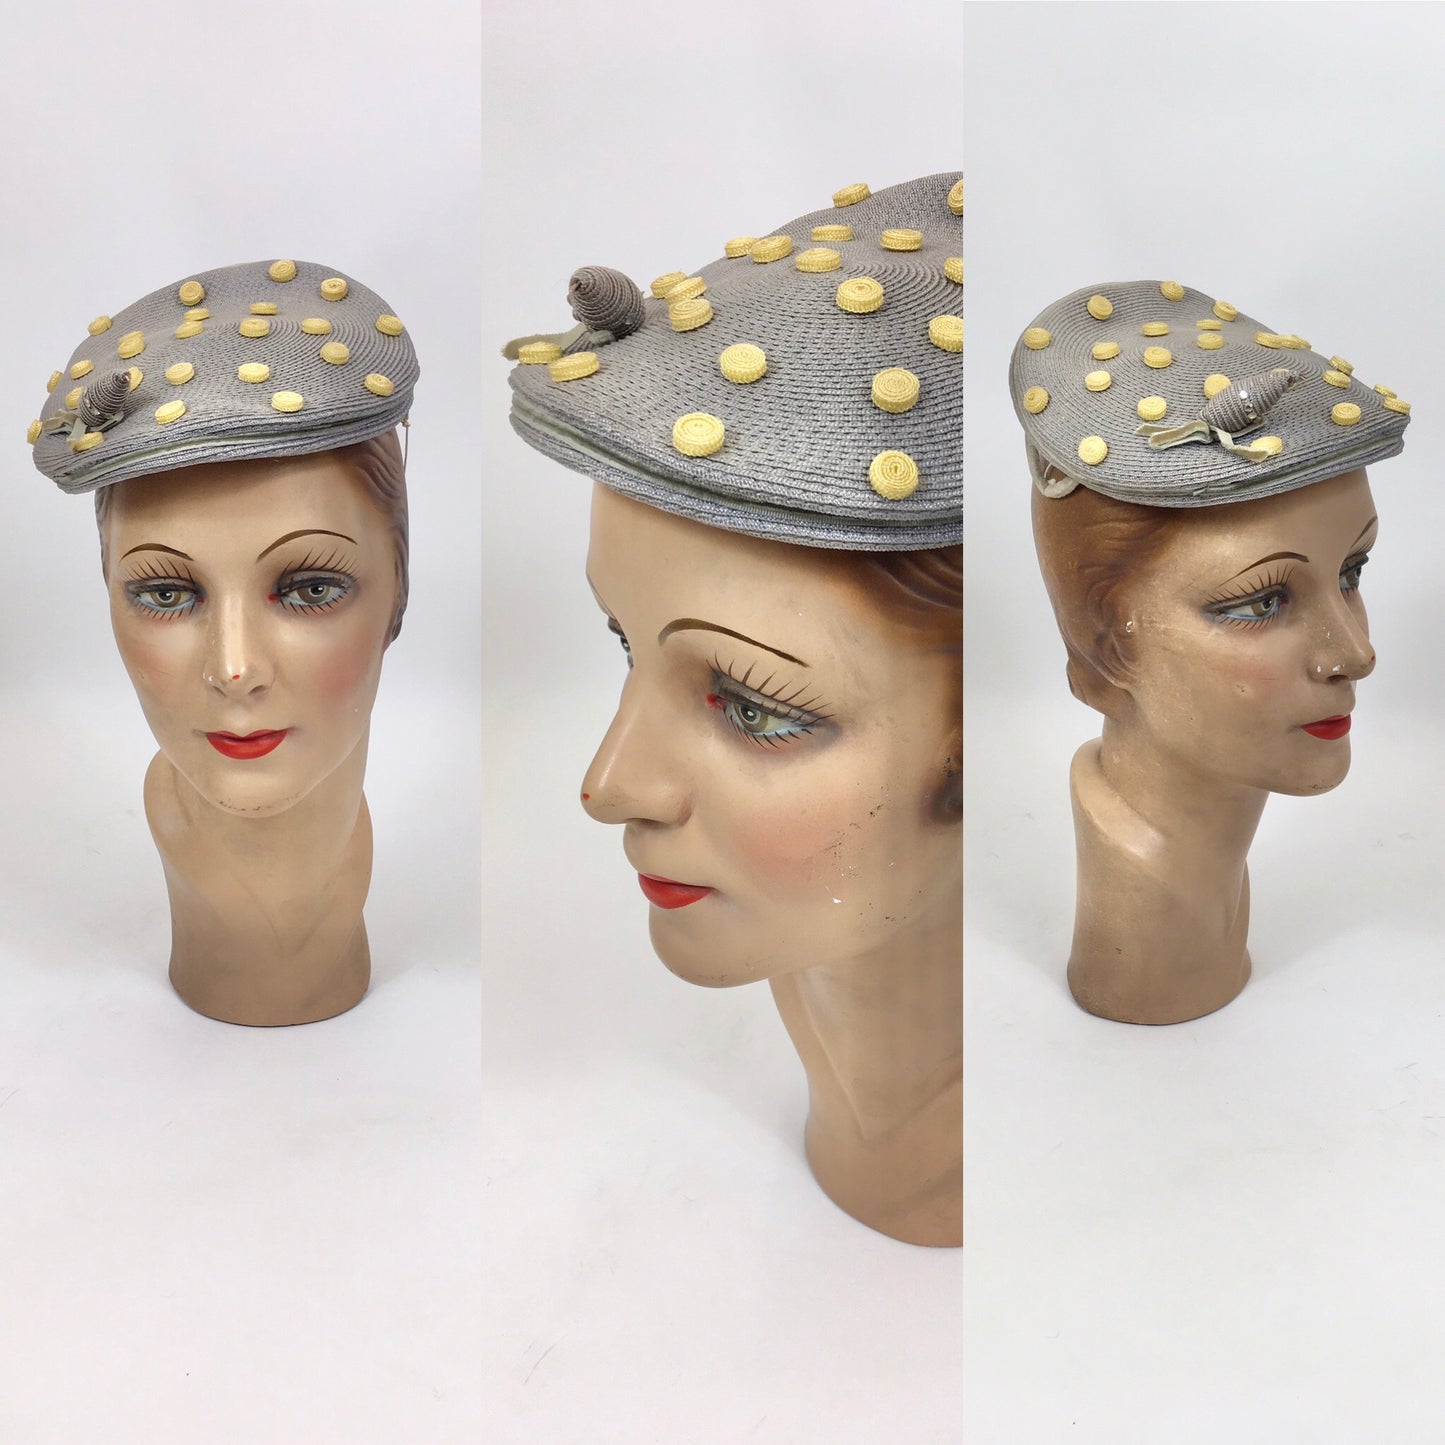 Original Late 1940's Stunning Headpiece - In Powder Grey & Primrose Yellow Polka Dots